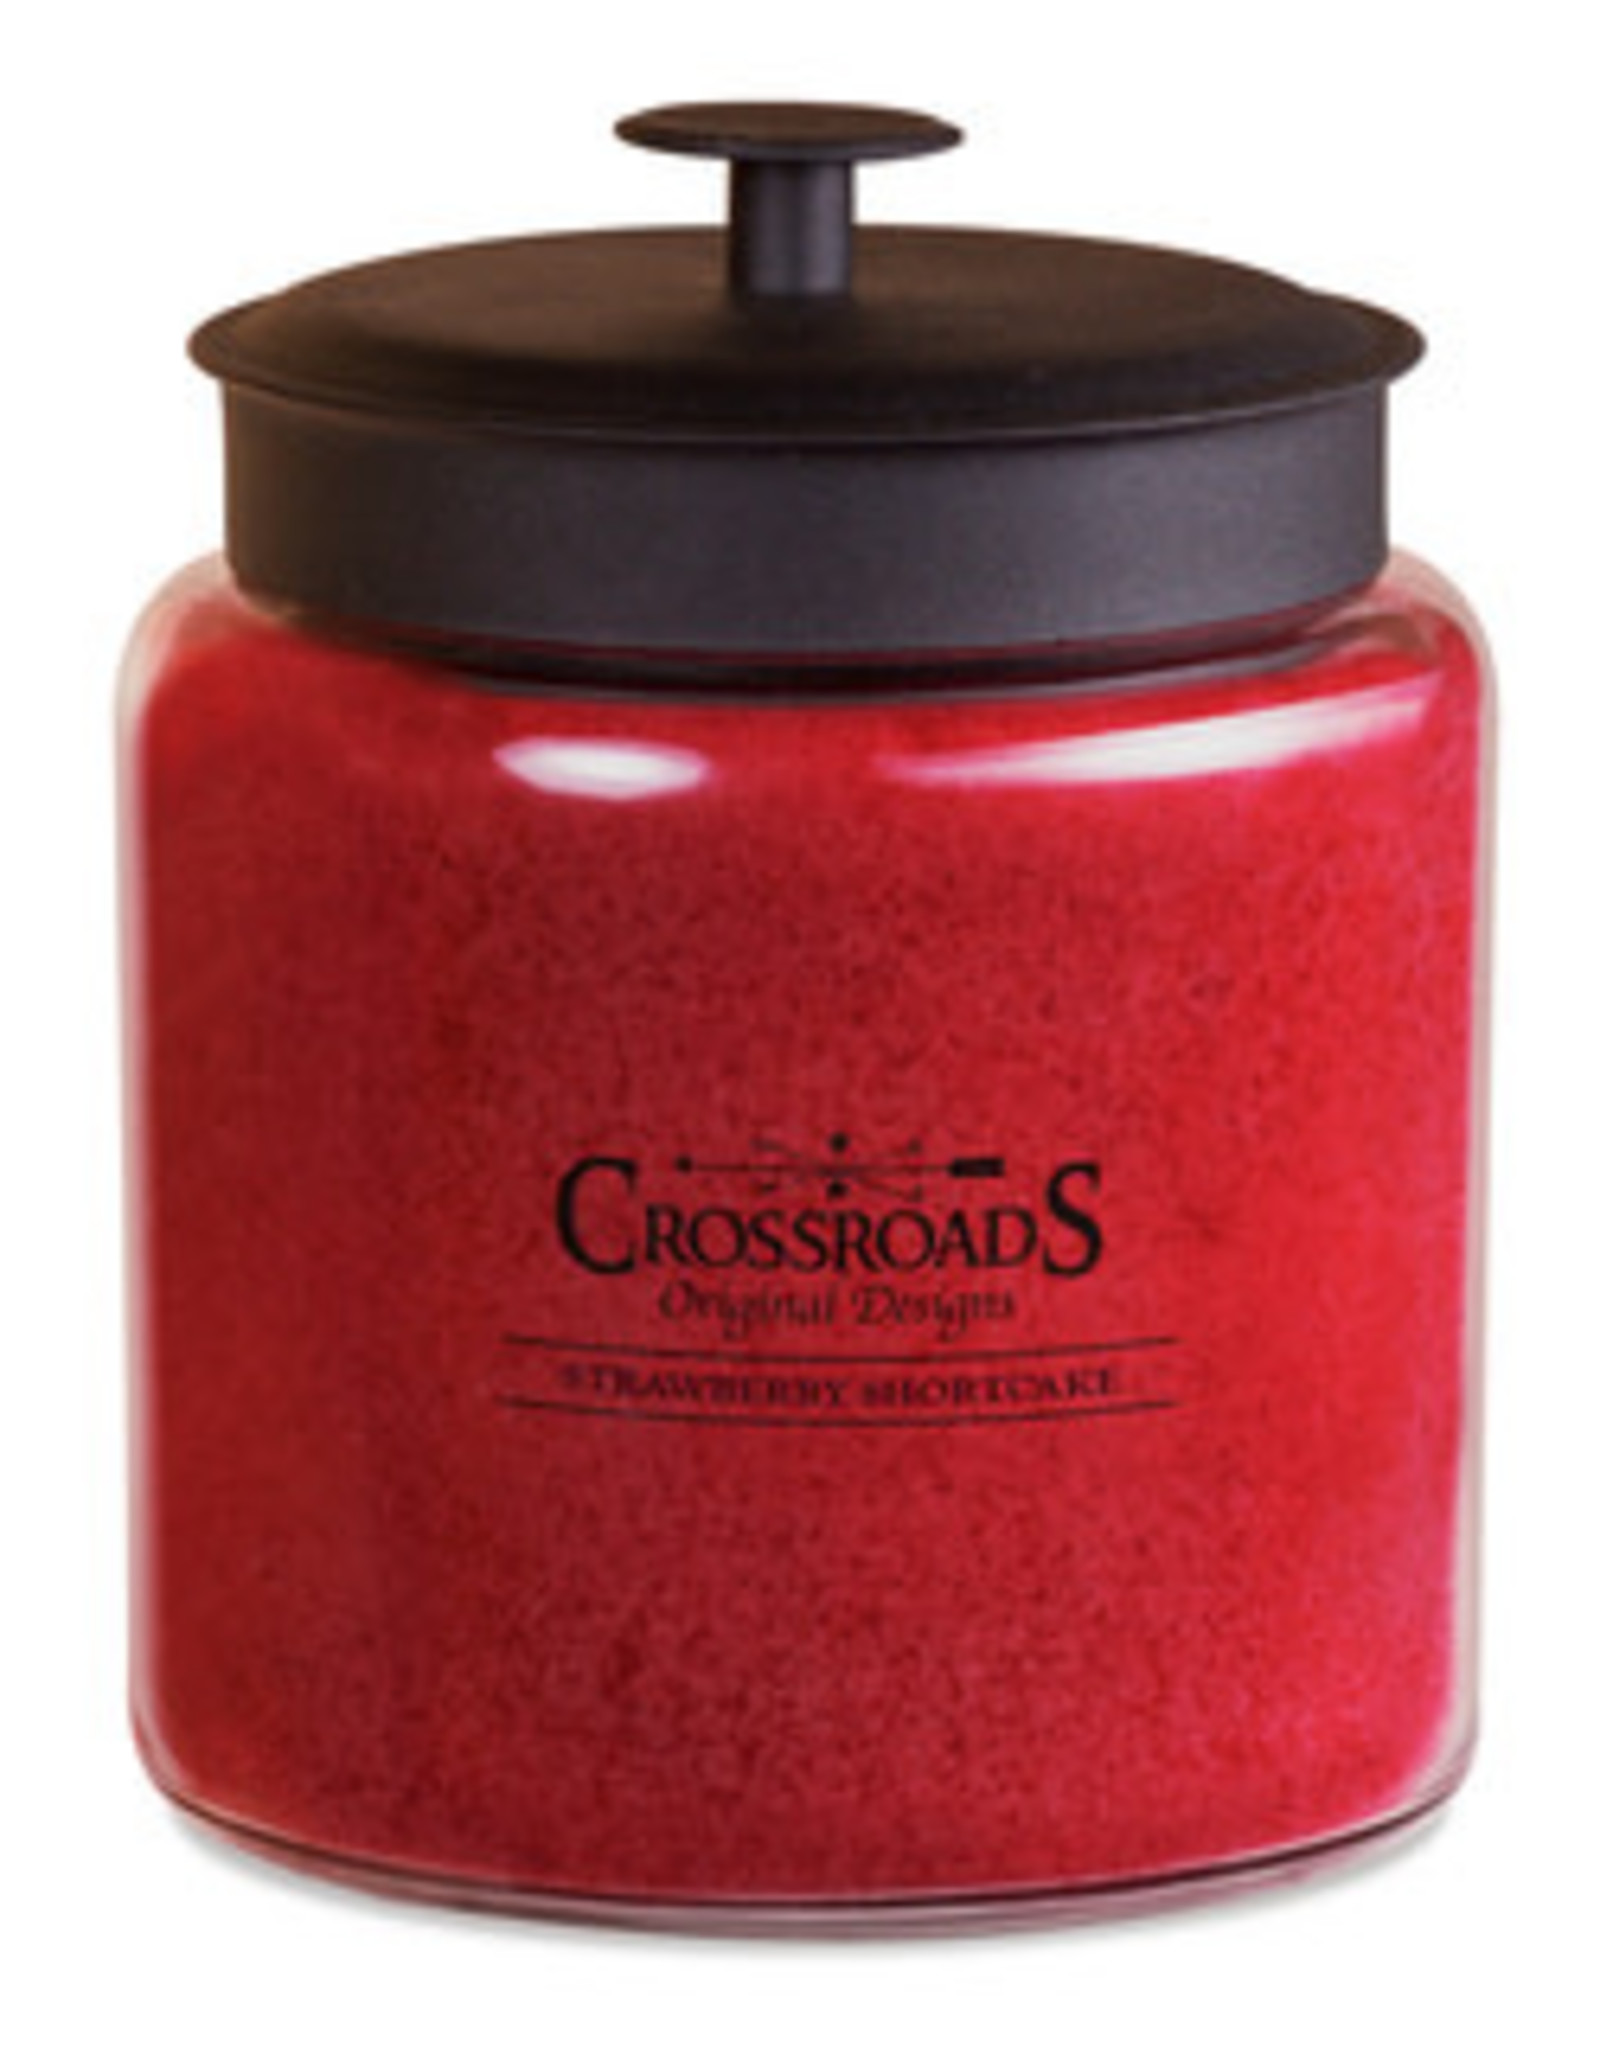 Crossroads Strawberry Shortcake Candle